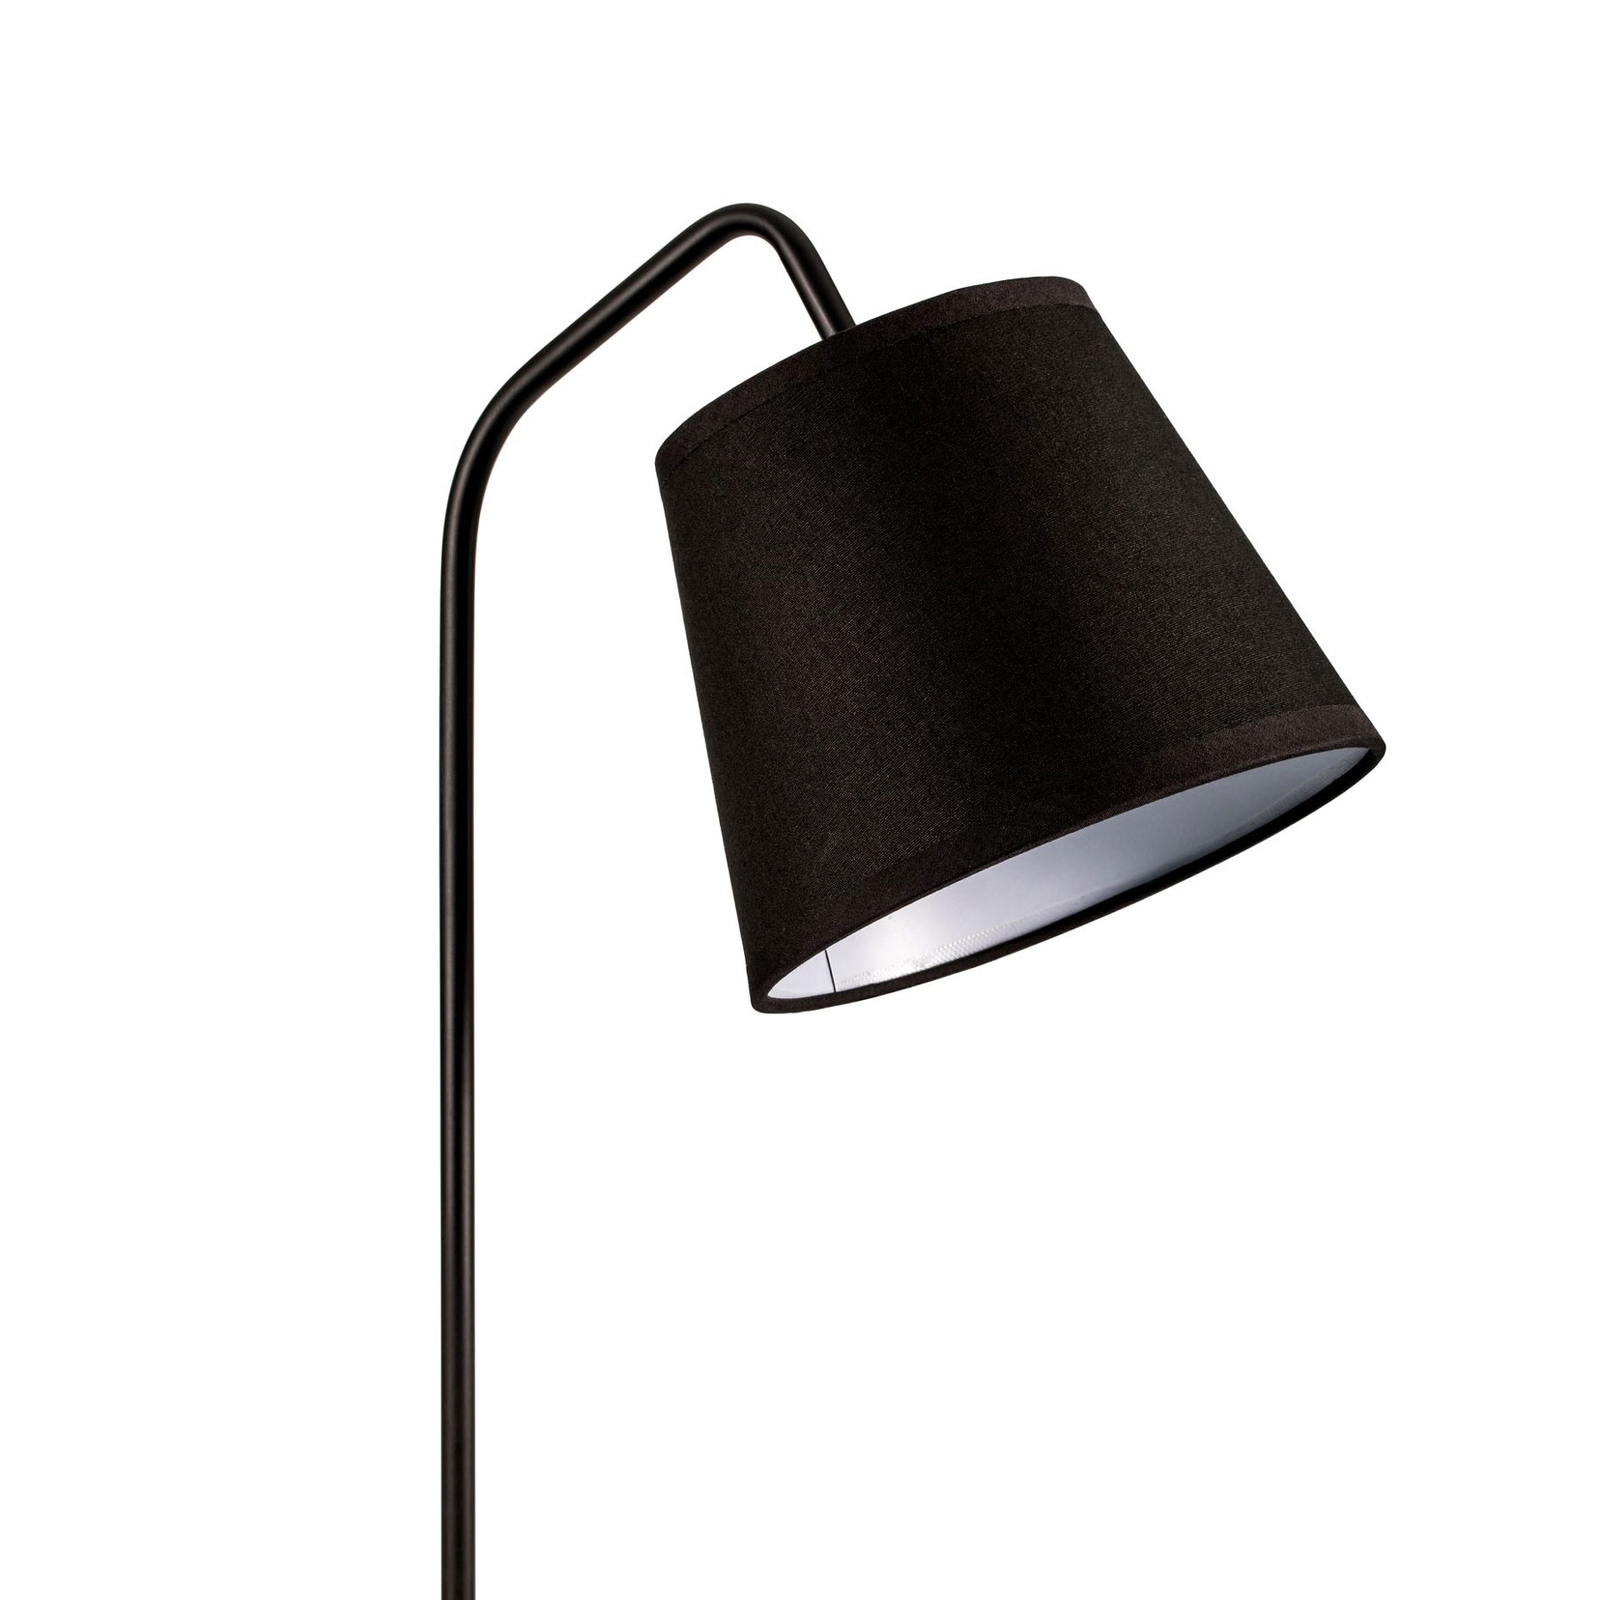 Pauleen True Elegance bordslampa helt i svart